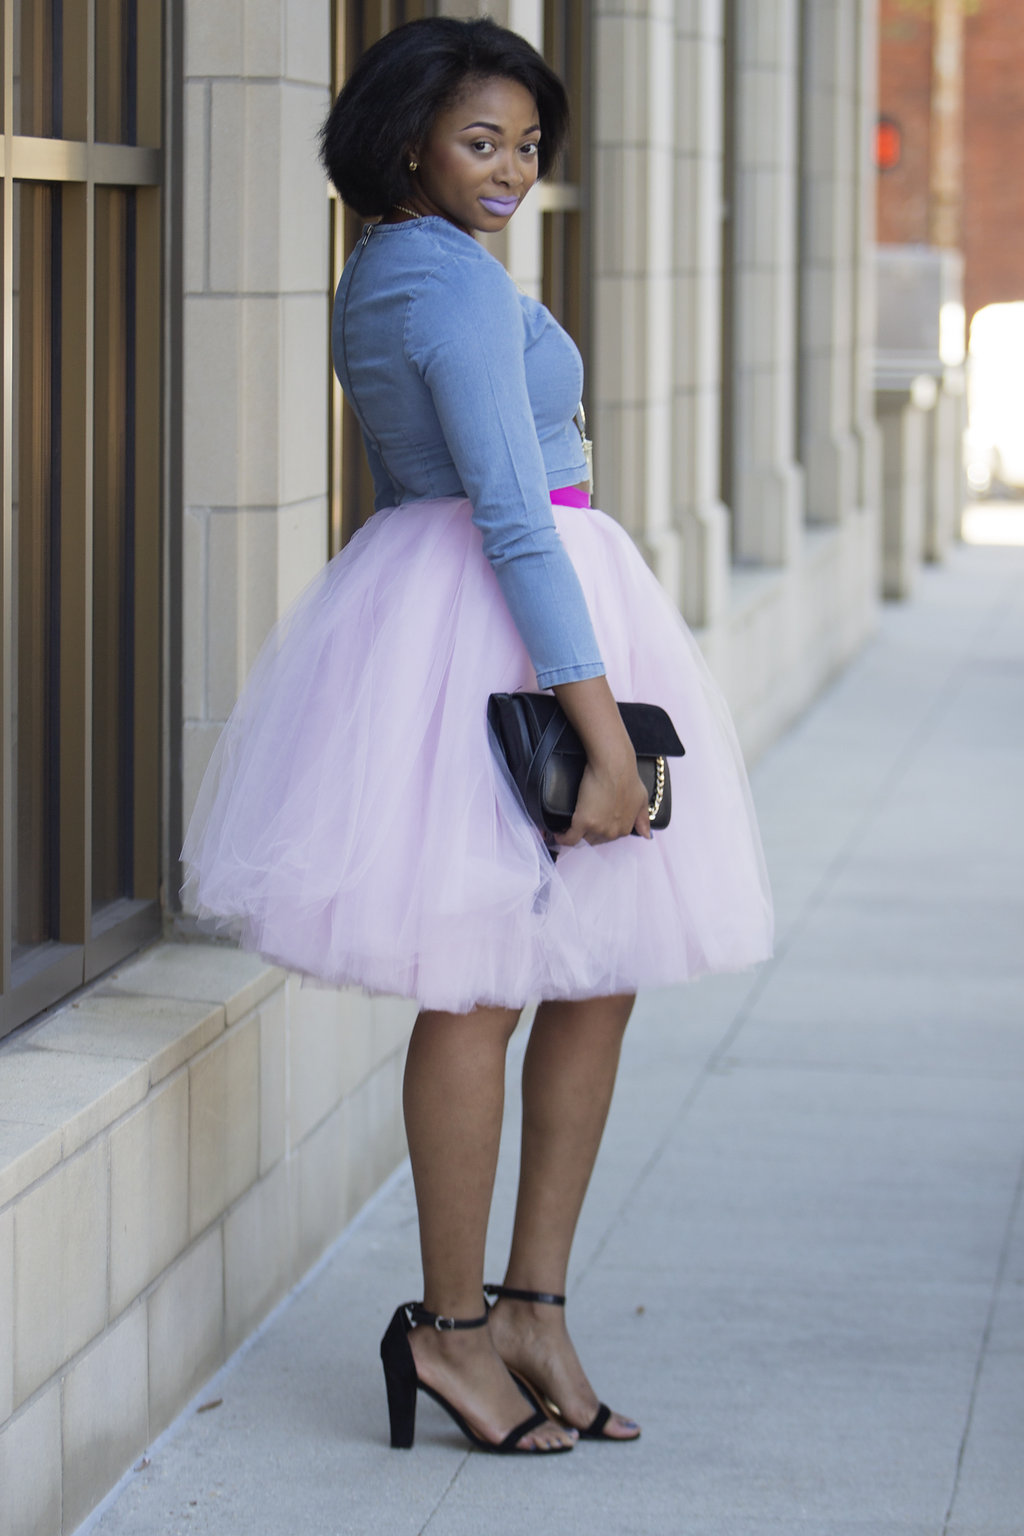 louisiana fashion blogger, black block heels